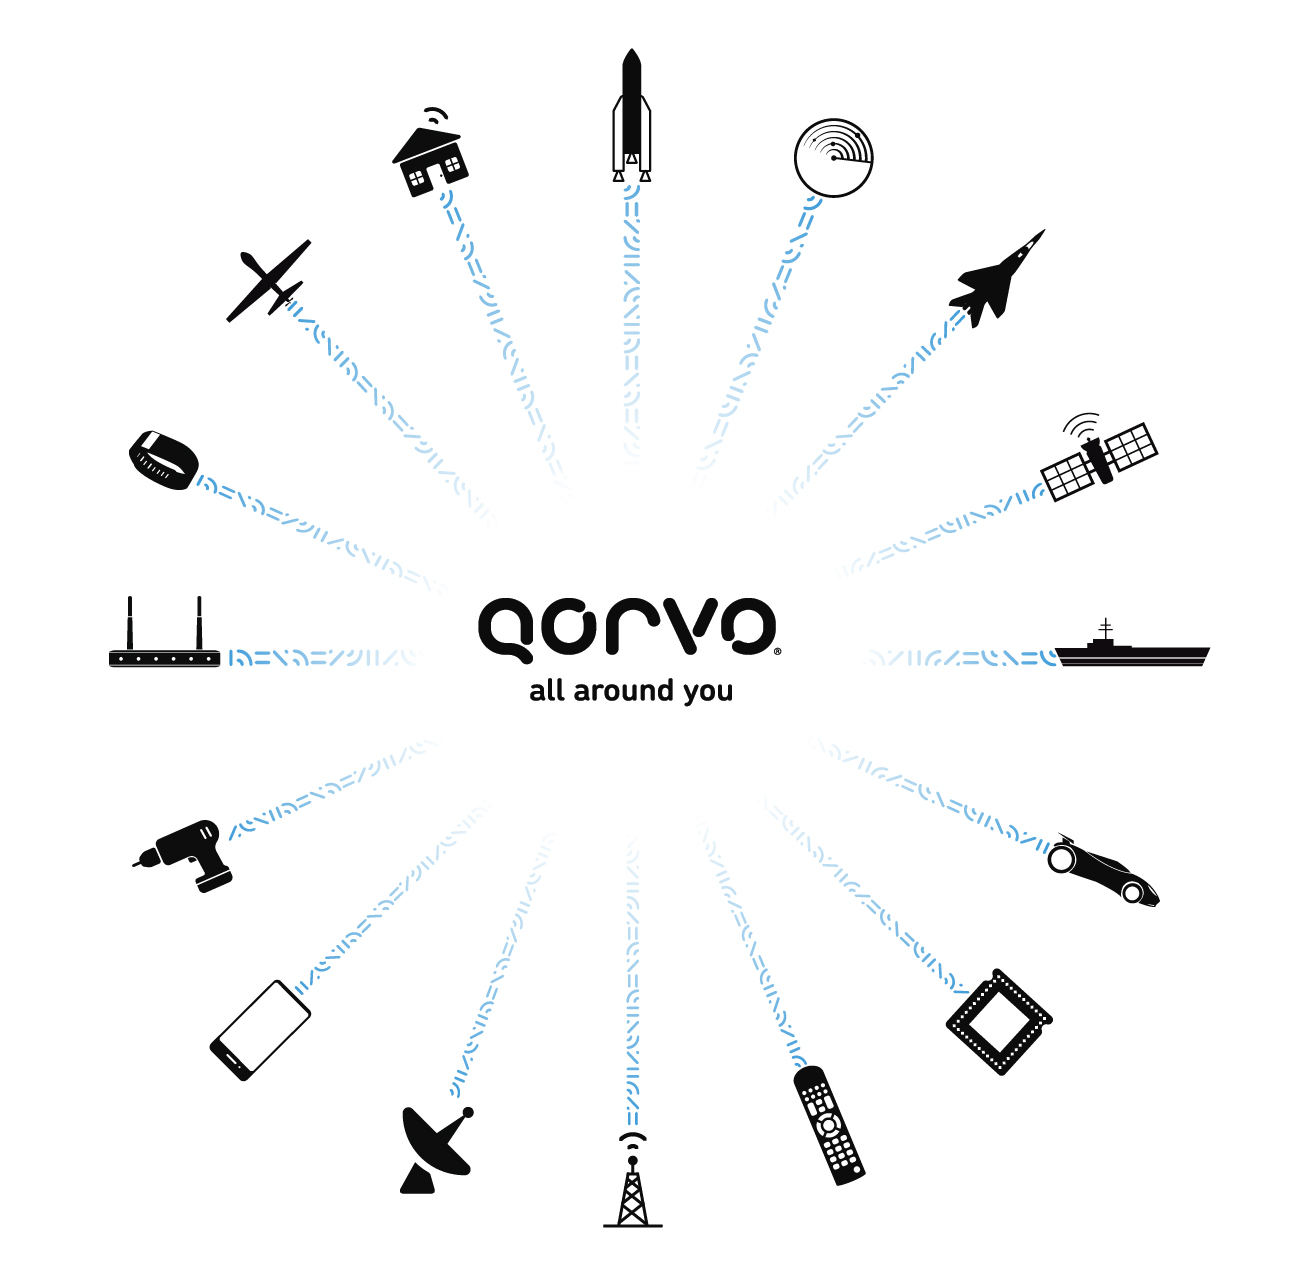 Qorvo is All Around You